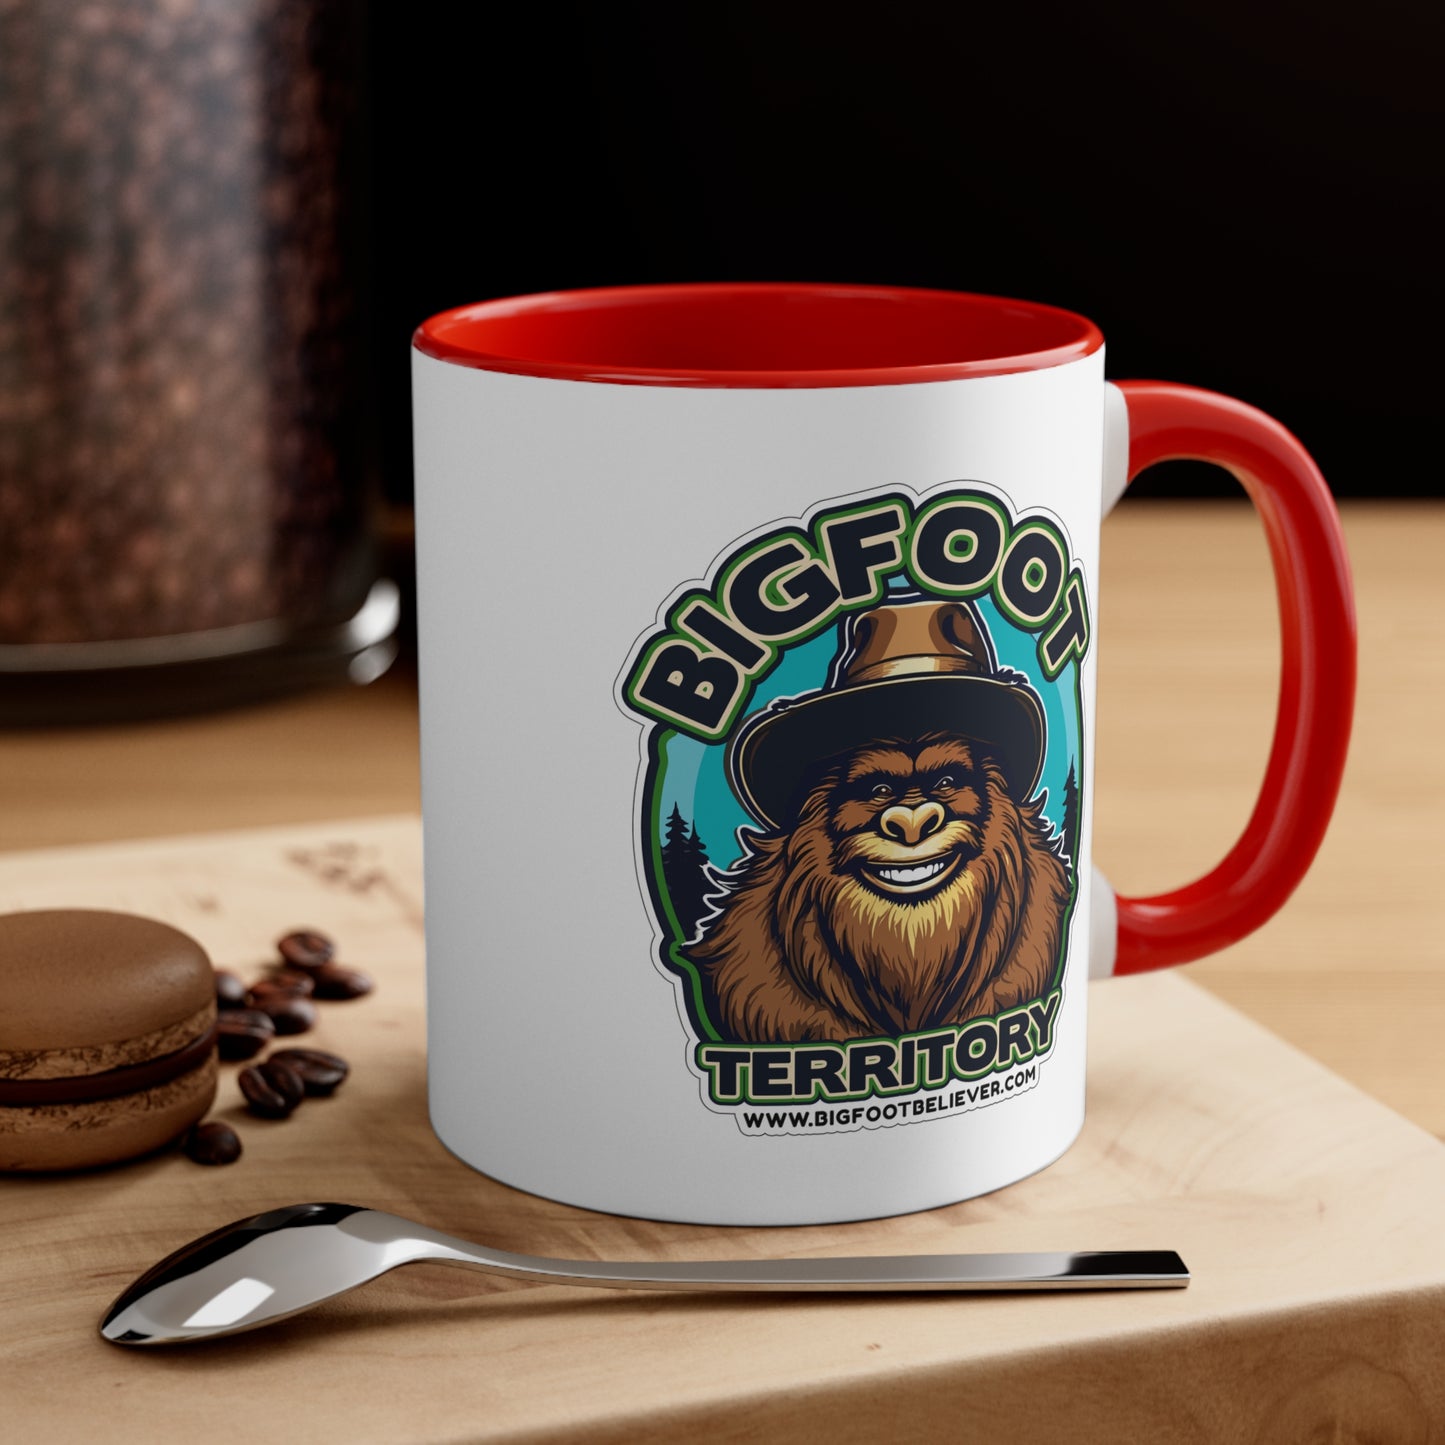 Bigfoot Territory Accent Coffee Mug, 11oz